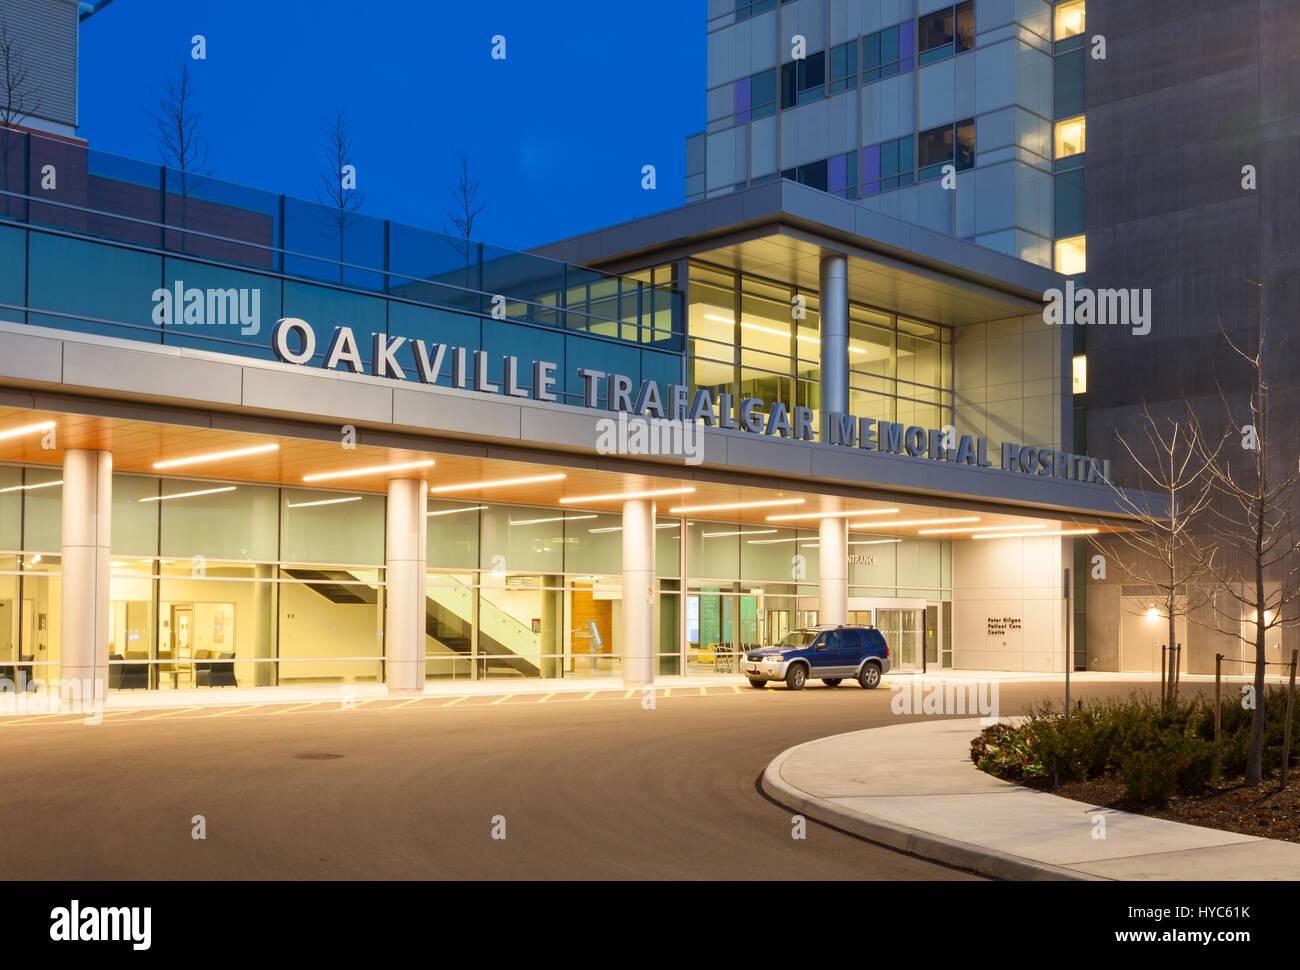 Der Haupteingang der Oakville Trafalgar Memorial Hospital in Oakville, Ontario, Kanada. Stockfoto